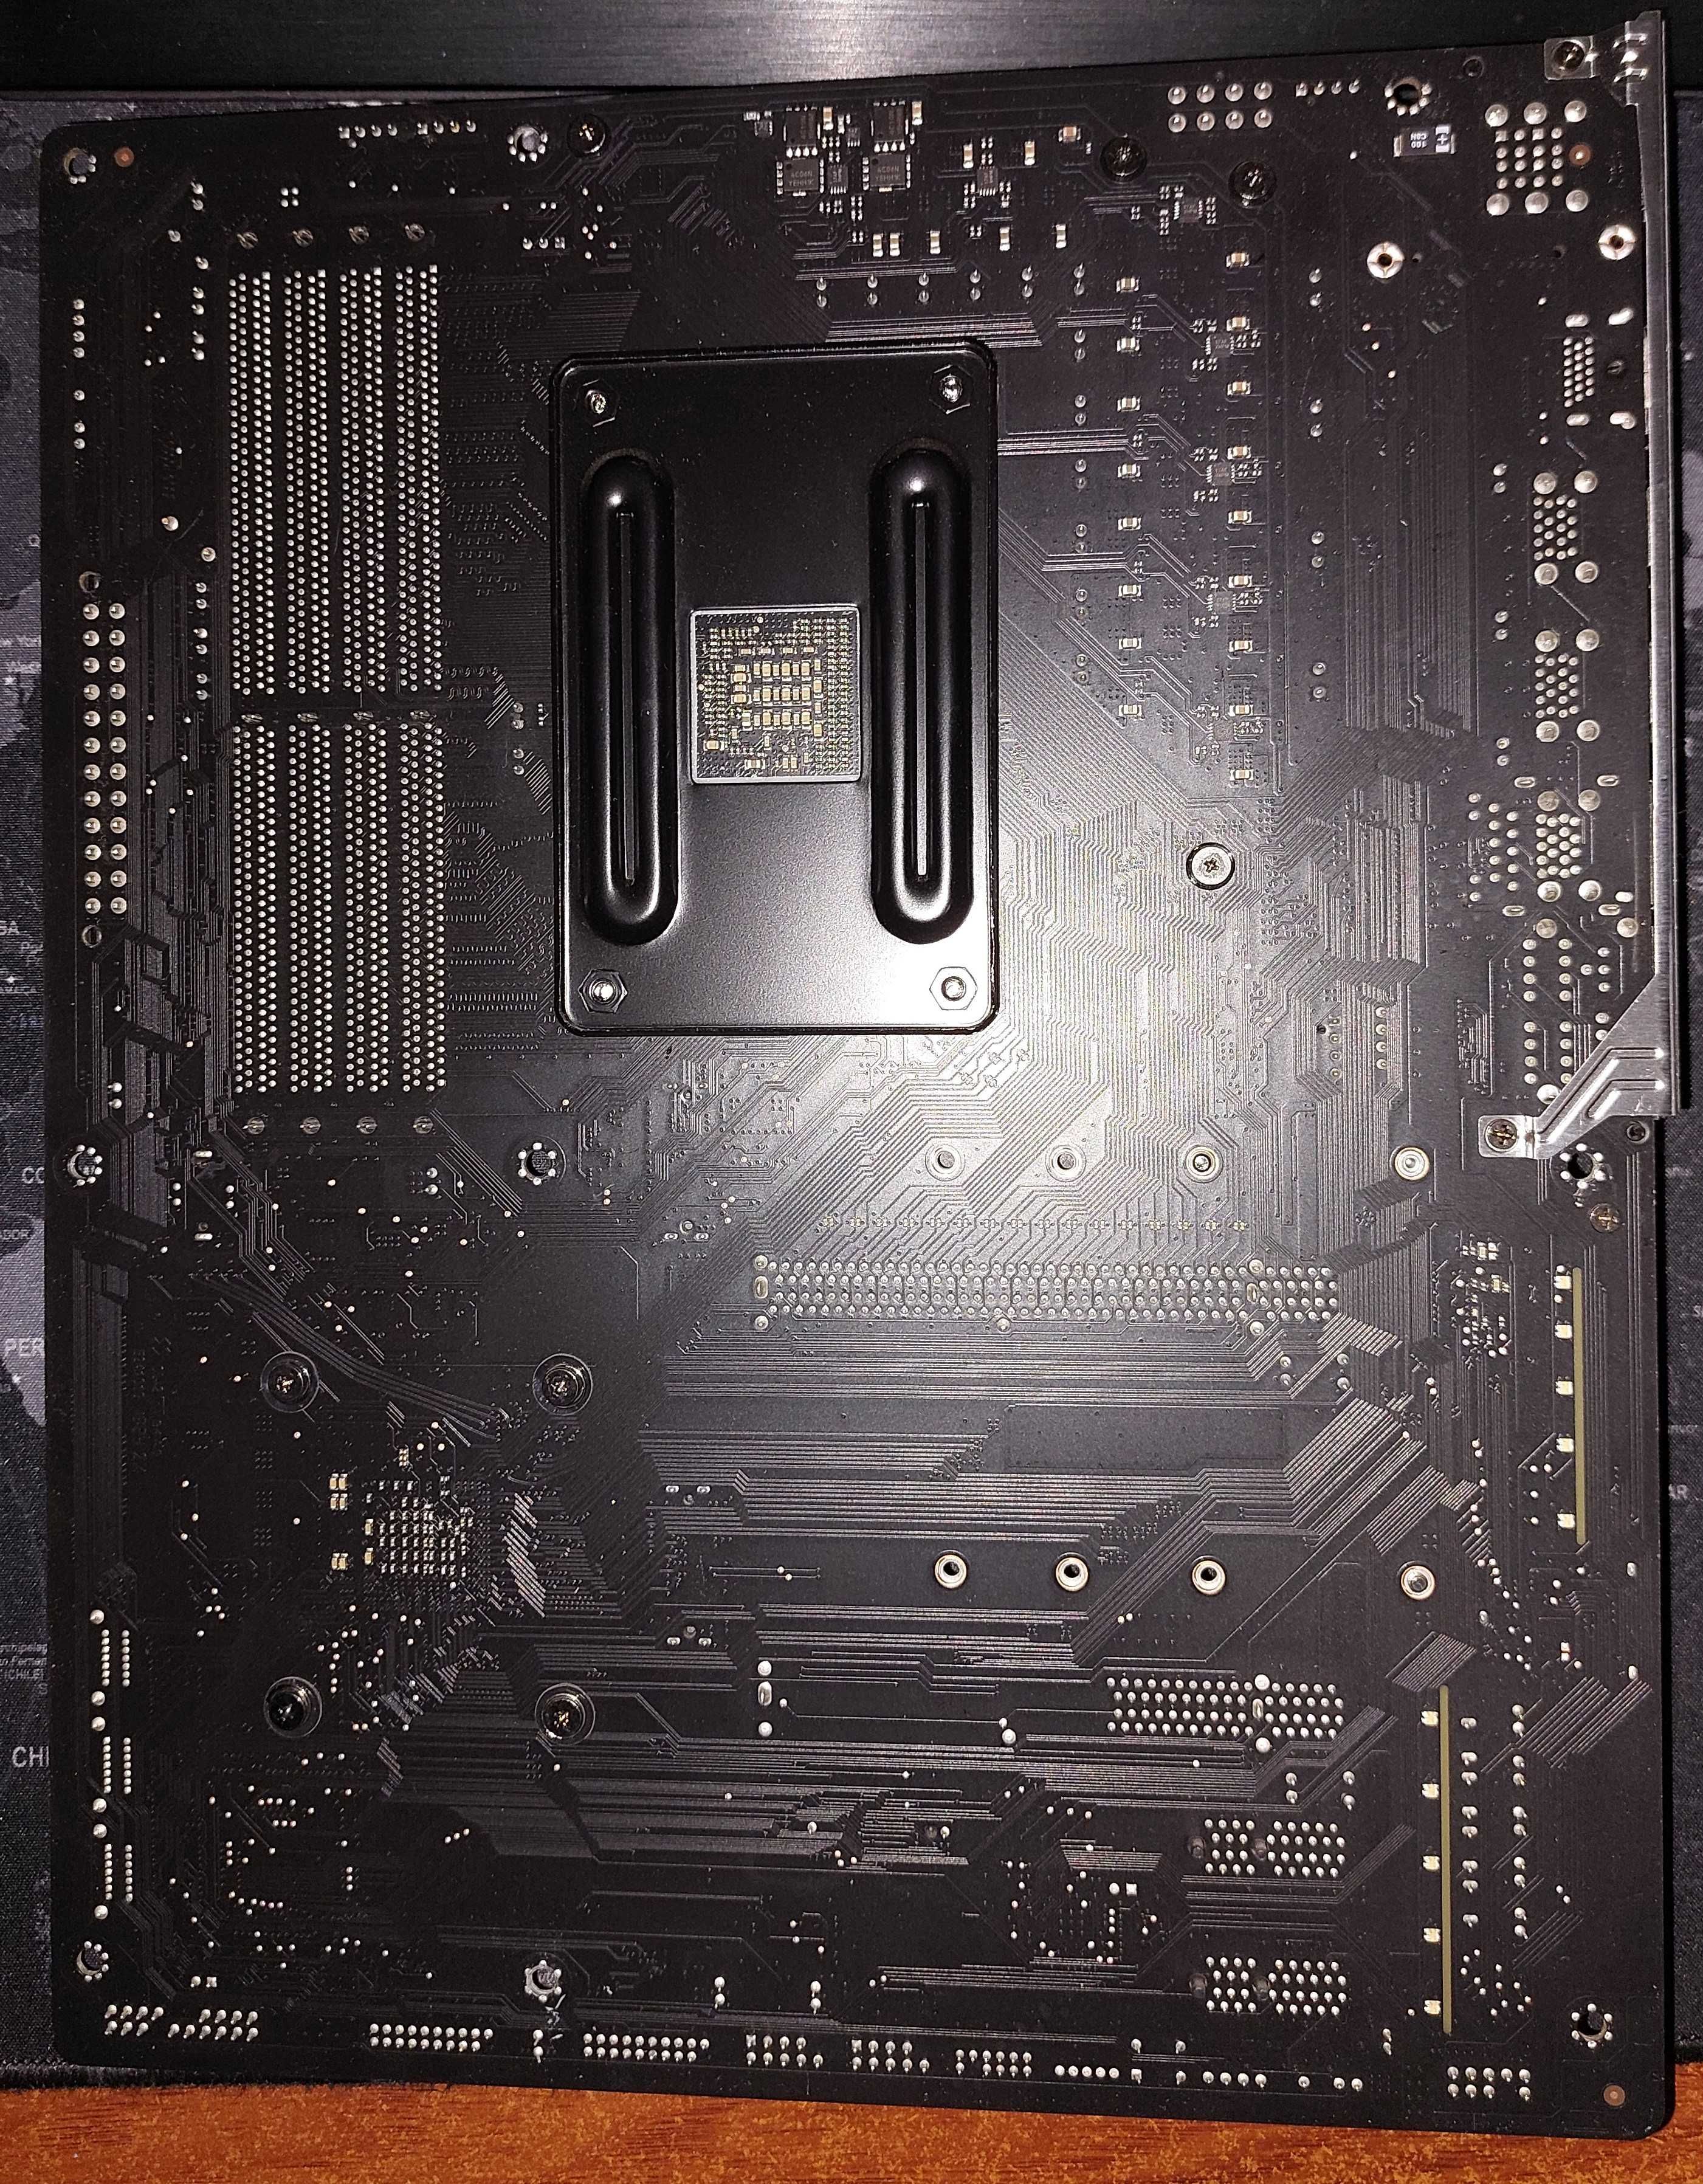 Motherboard Gigabyte Aorus Elite AMD Socket AM4 - X570